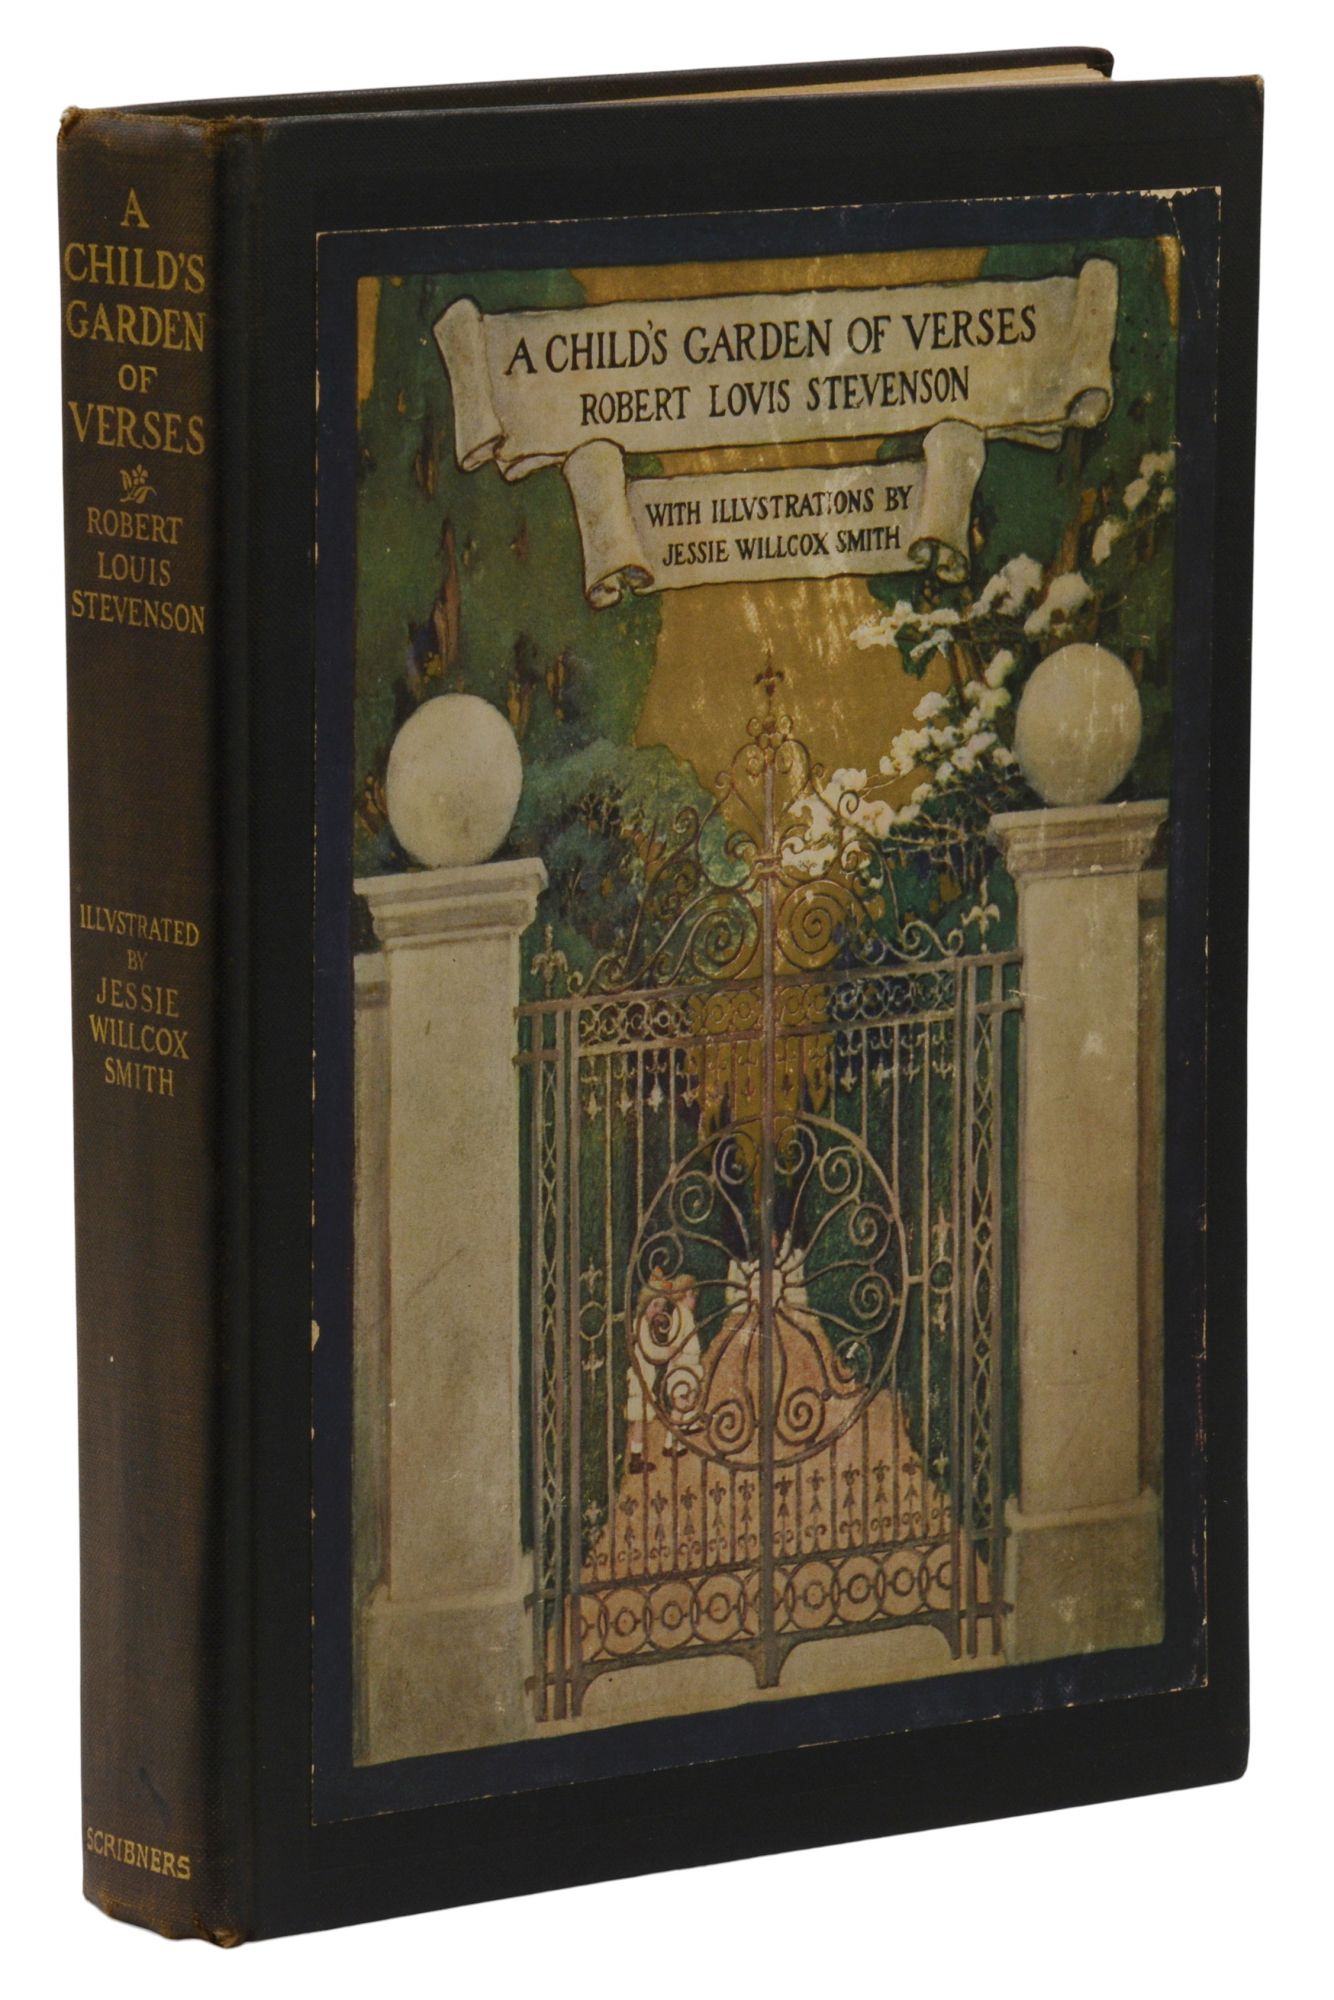 A Child's Garden Of Verses by Robert Louis Stevenson, Illustrated